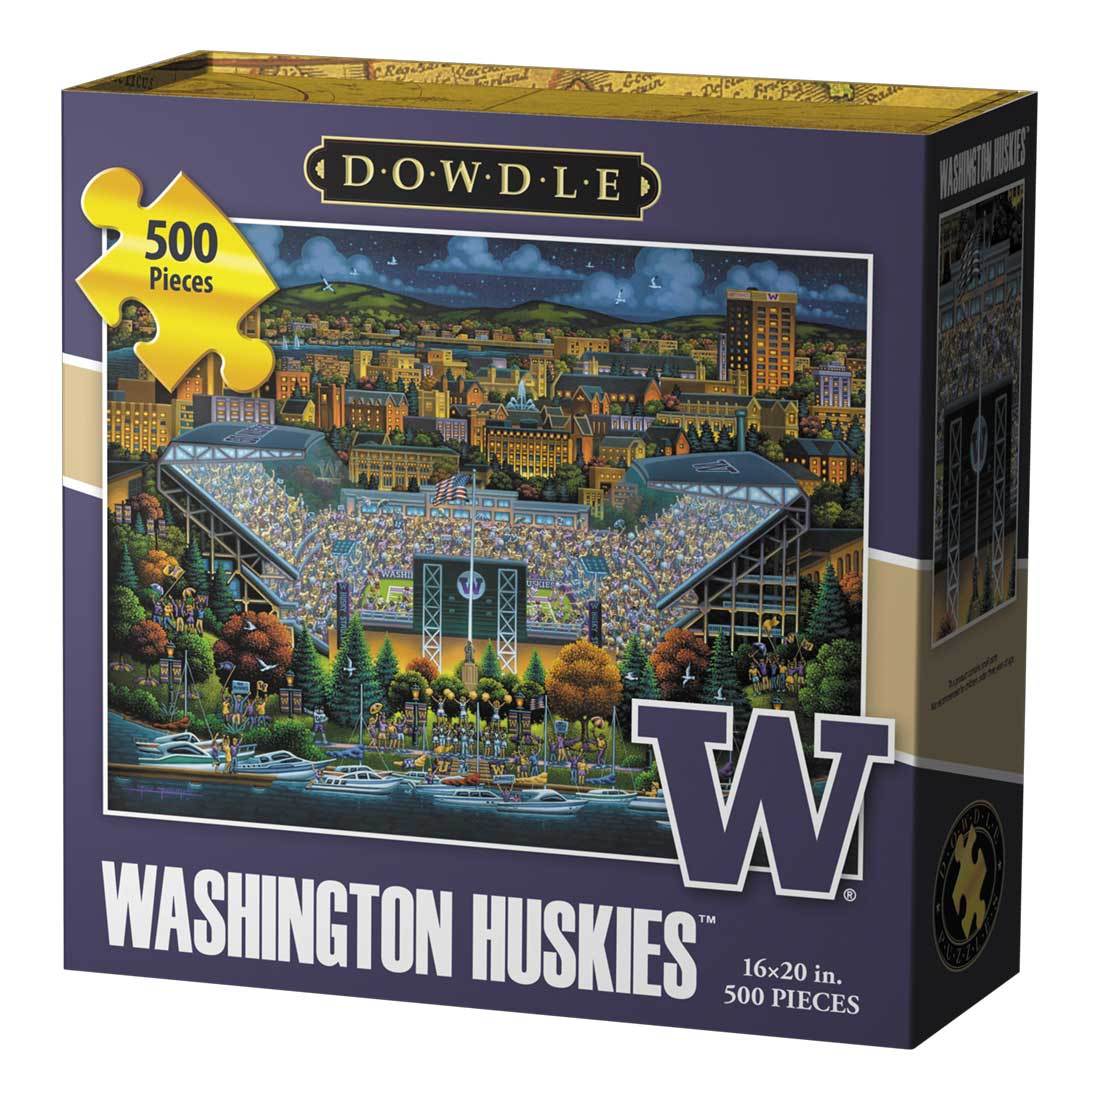 00256 16 X 20 In. Washington Huskies Jigsaw Puzzle - 500 Piece